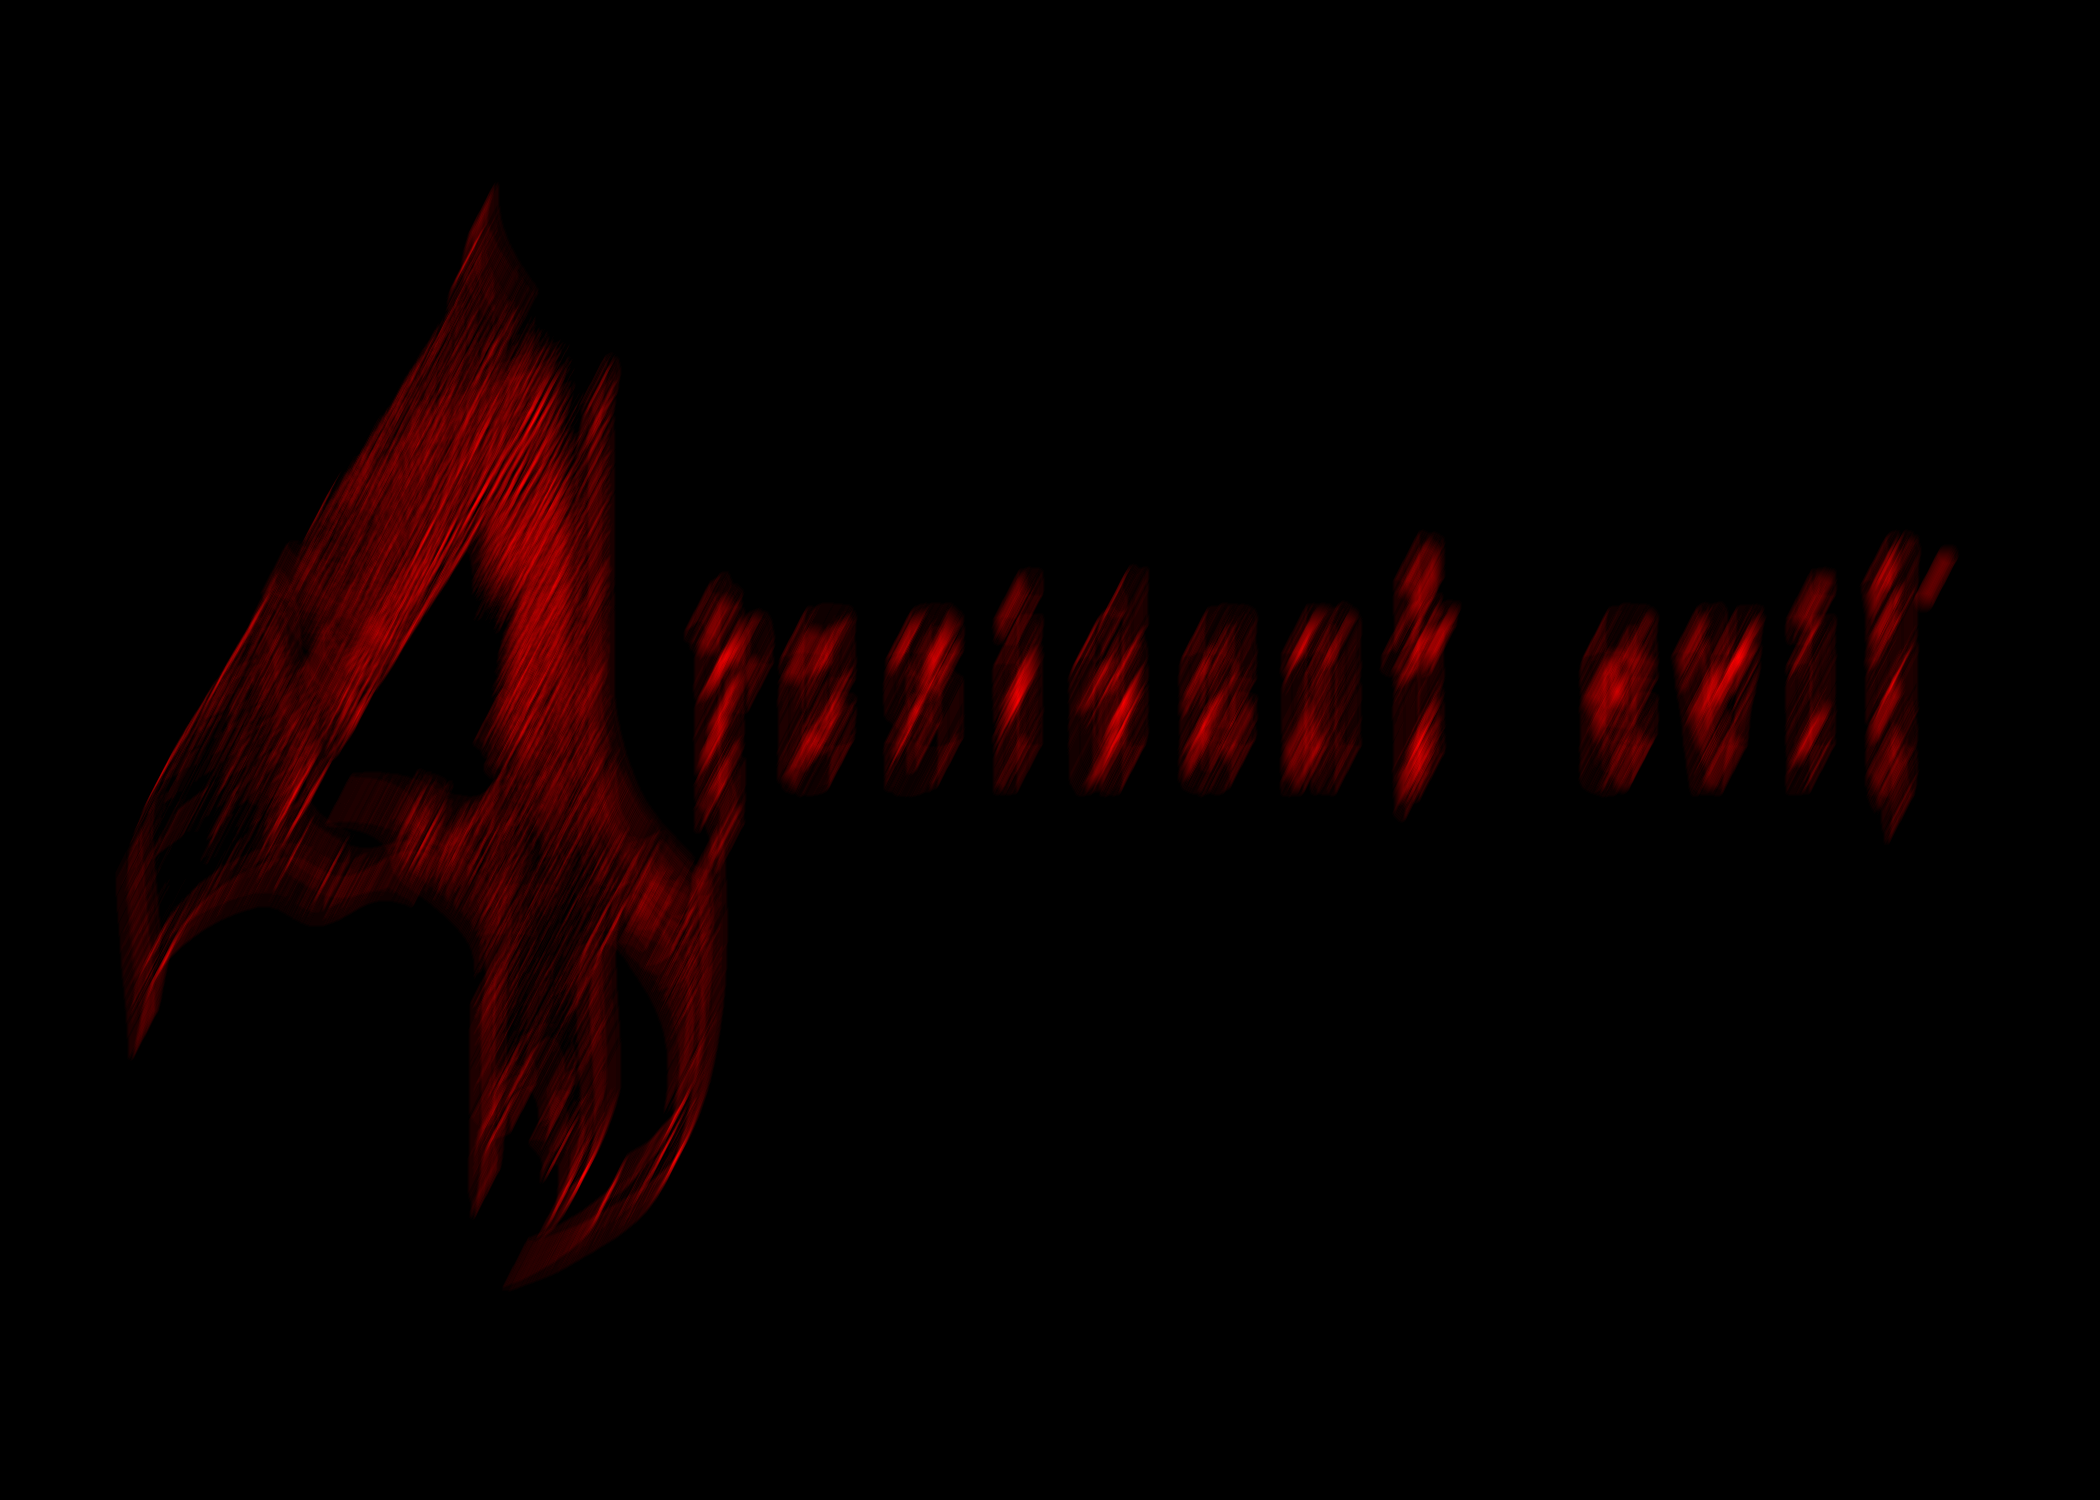 Animated Wolf Logo - Resident Evil 4 Animated Logo:. by Ayumi-Wolf-Dragon on DeviantArt